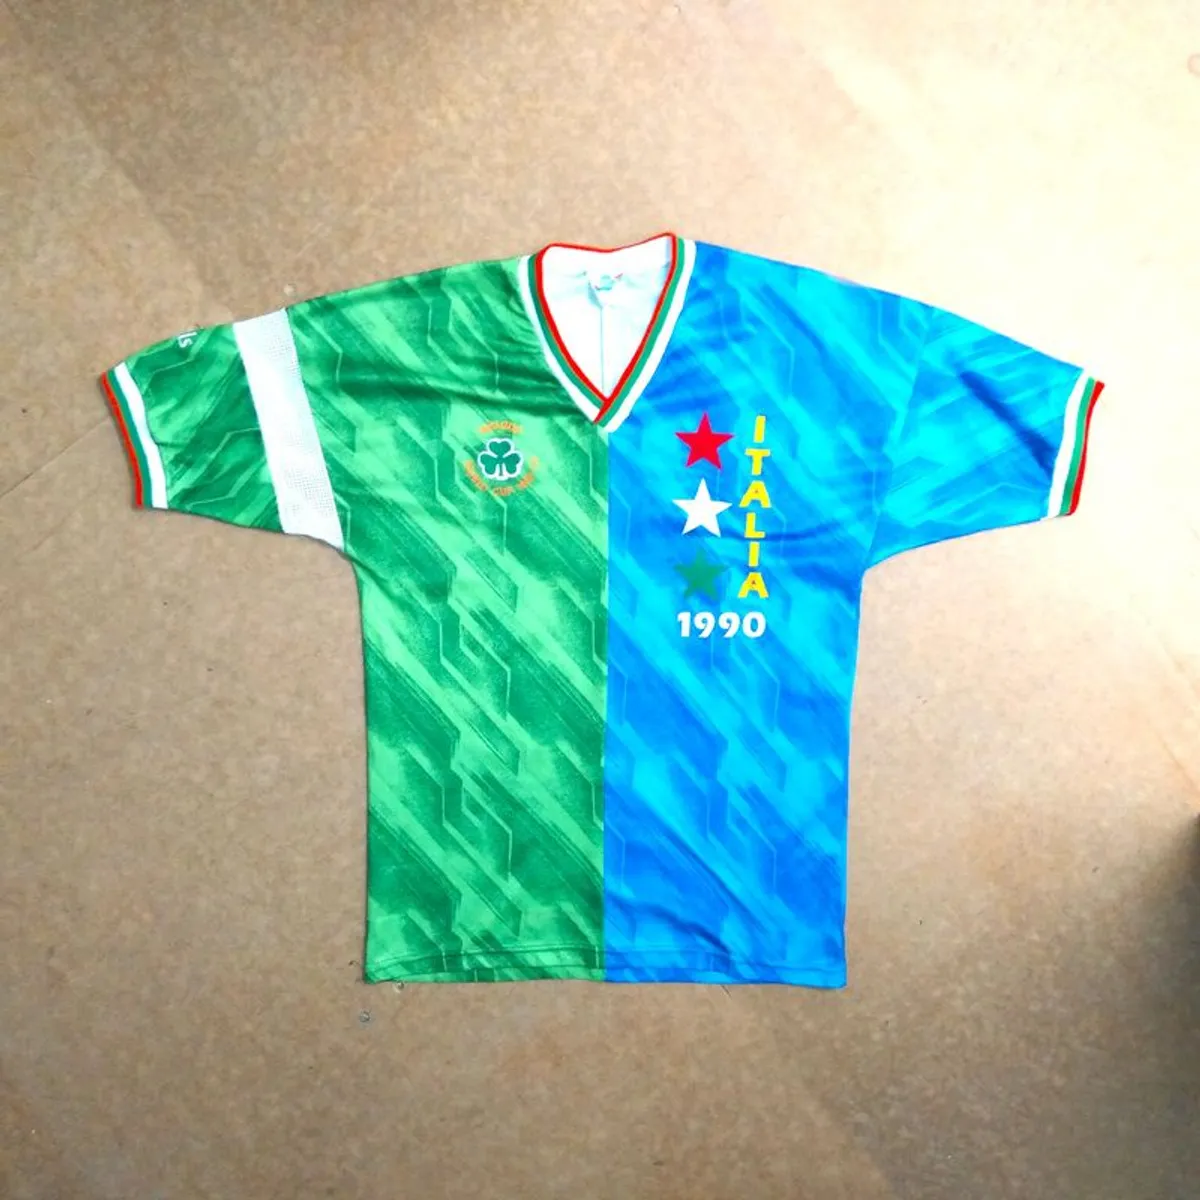 FREE POST Italia 90 Republic of Ireland (S) Jersey Shirt O'Neills  Vintage Retro Soccer Football Eire Irish 90 Half Small - Image 1